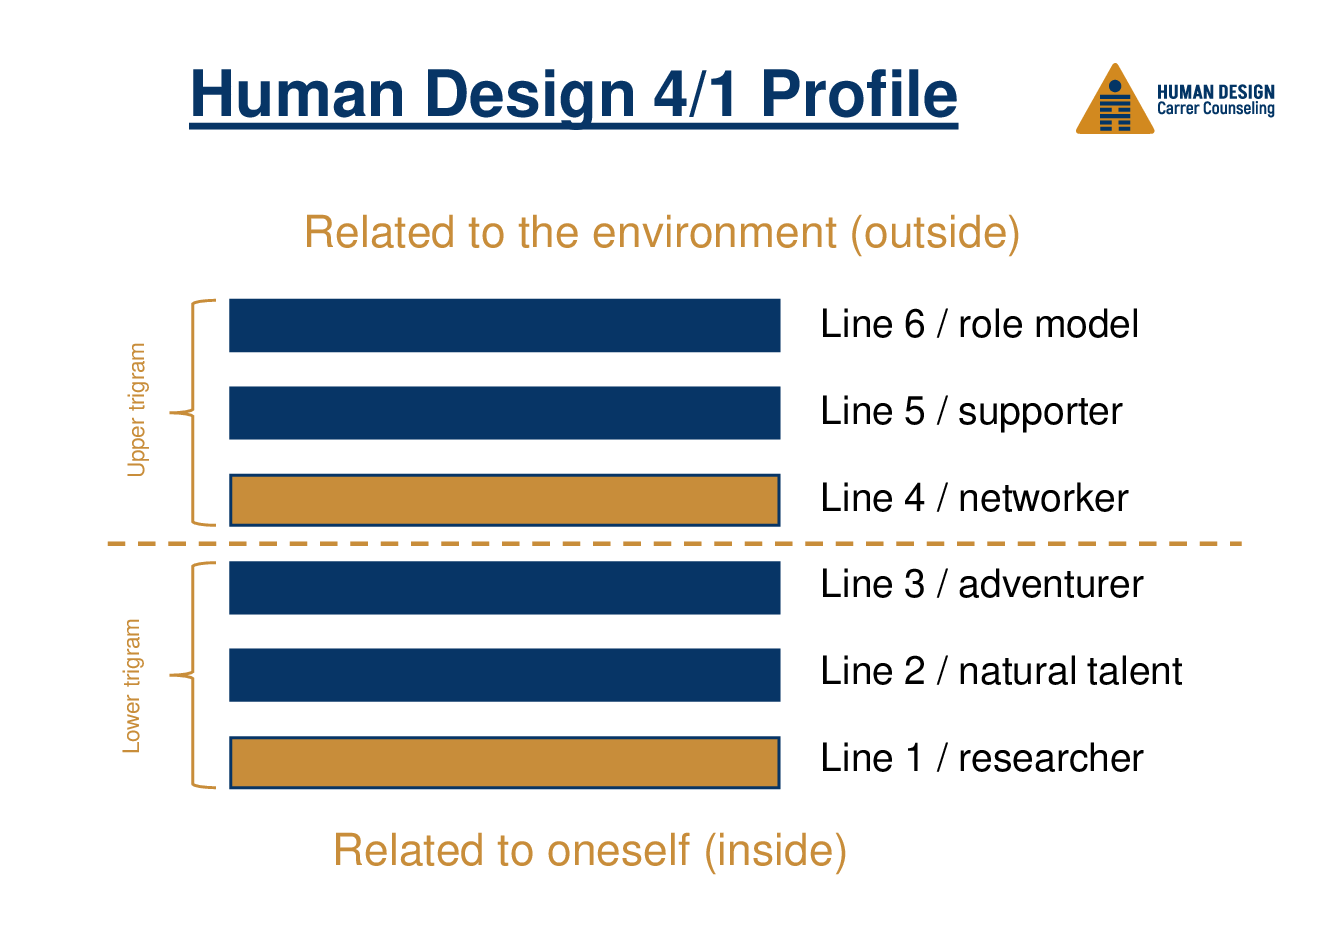 Human Design 4/1 Profile on the job